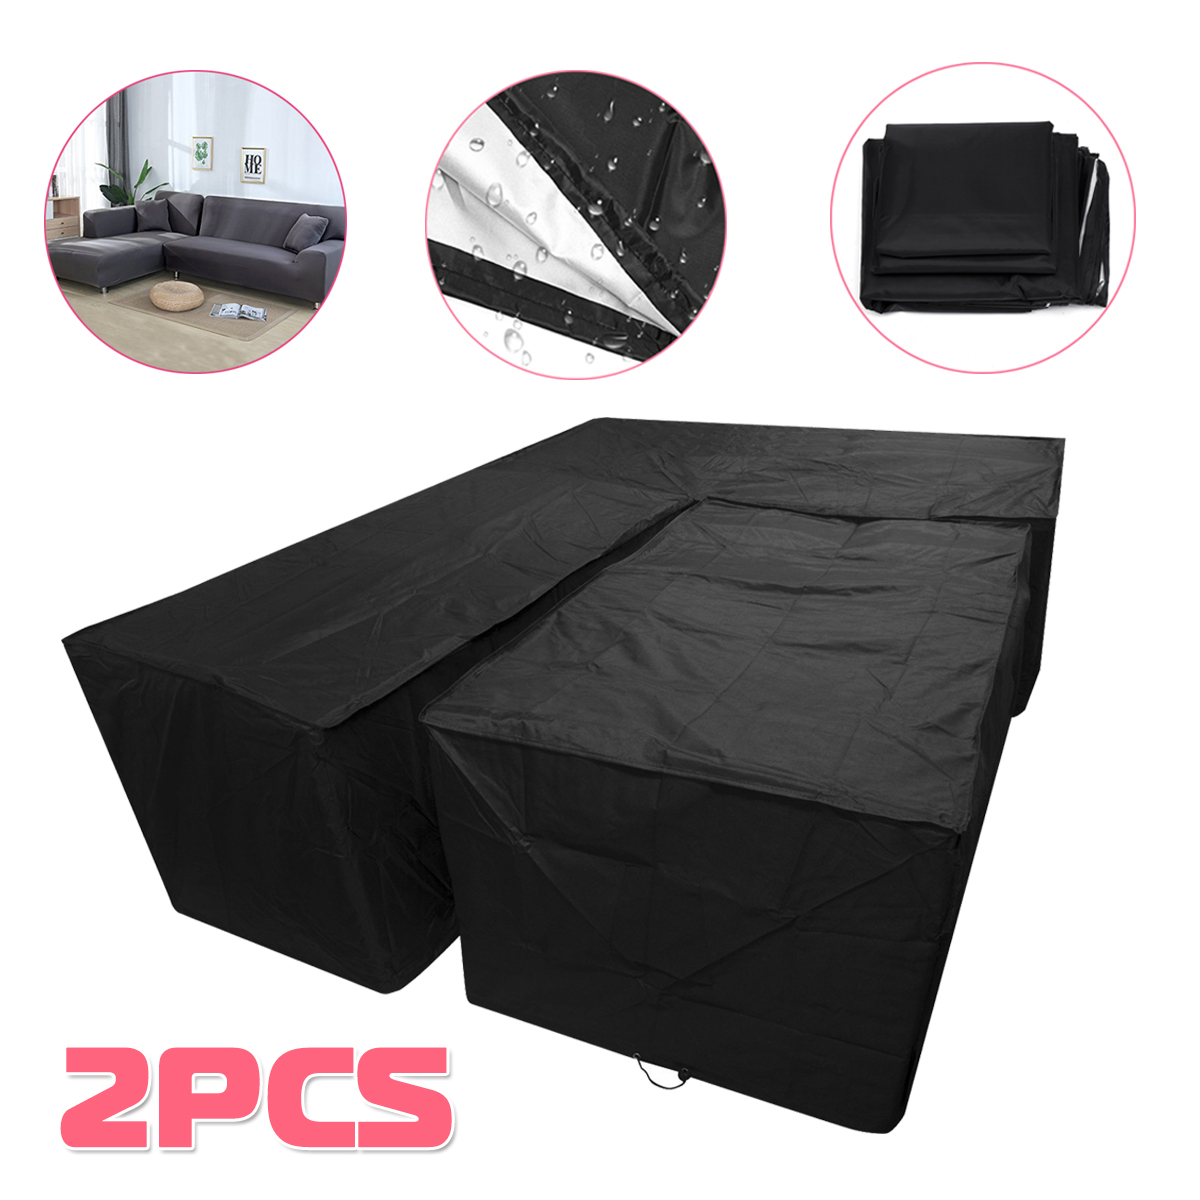 

2Pcs/Set Garden Furniture Sofa Cover L Shape Corner Rattan Waterproof Protective